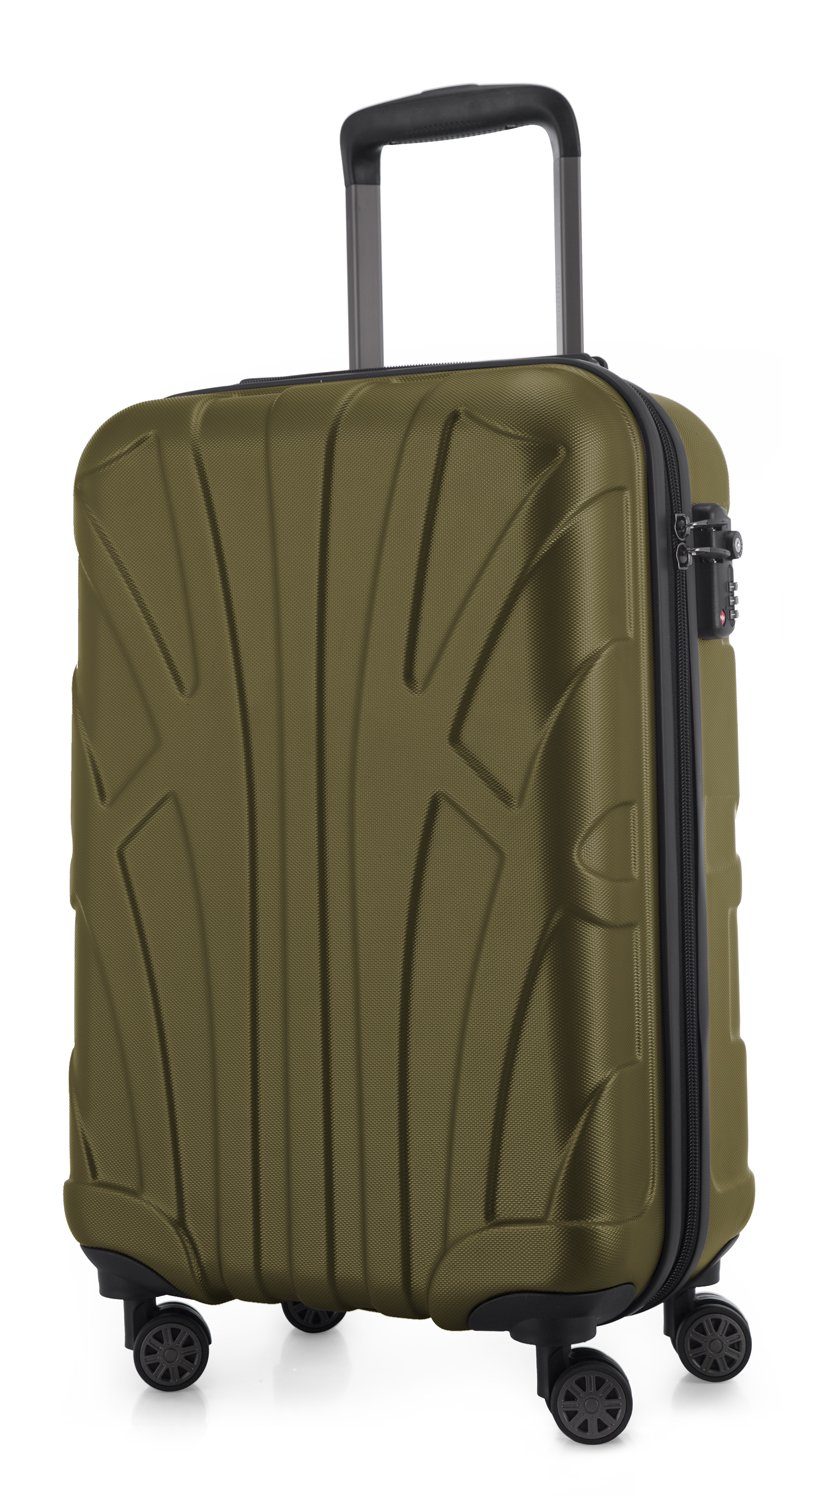 Suitline Handgepäckkoffer S1, 4 Rollen, Robust, Leicht, TSA Zahlenschloss, 55 cm, 33 L Packvolumen